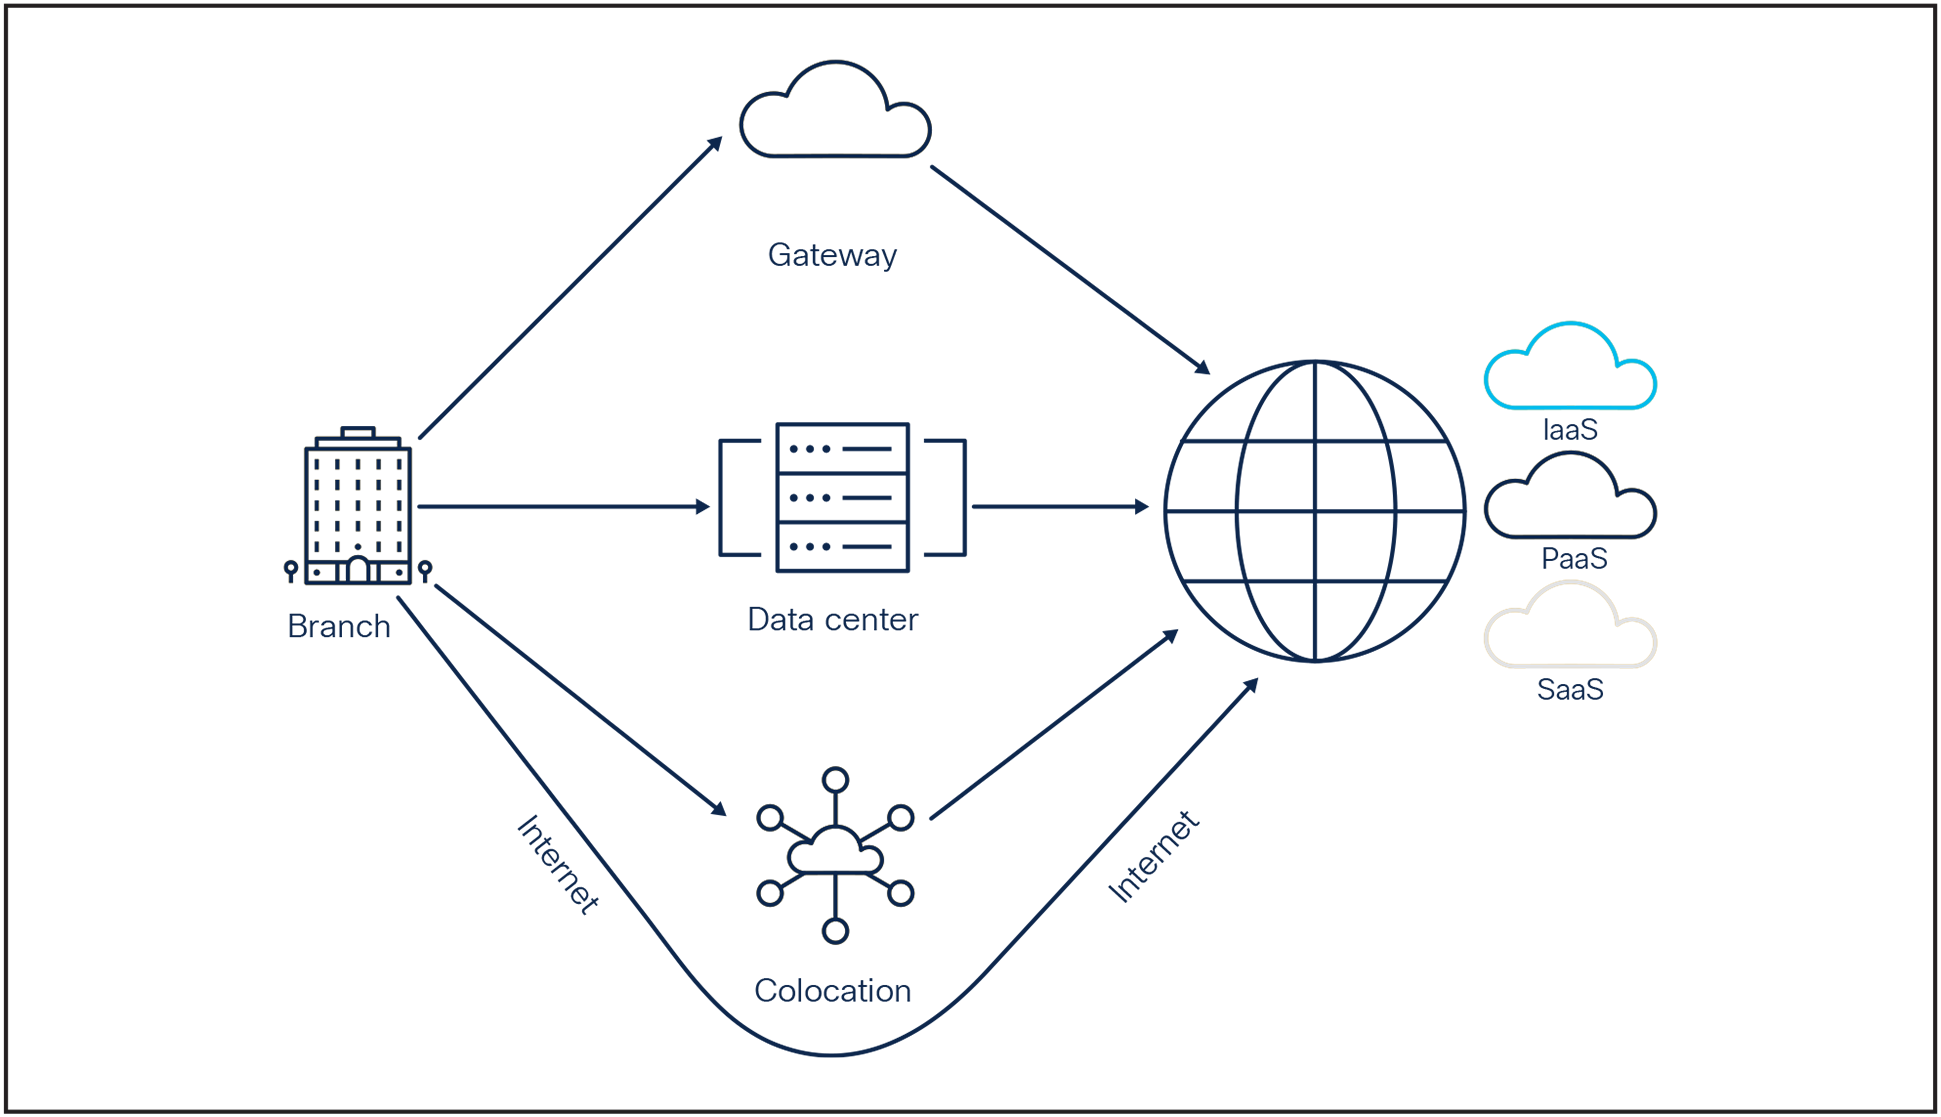 Cisco SD-WAN Cloud OnRamp for IaaS, PaaS, and SaaS applications